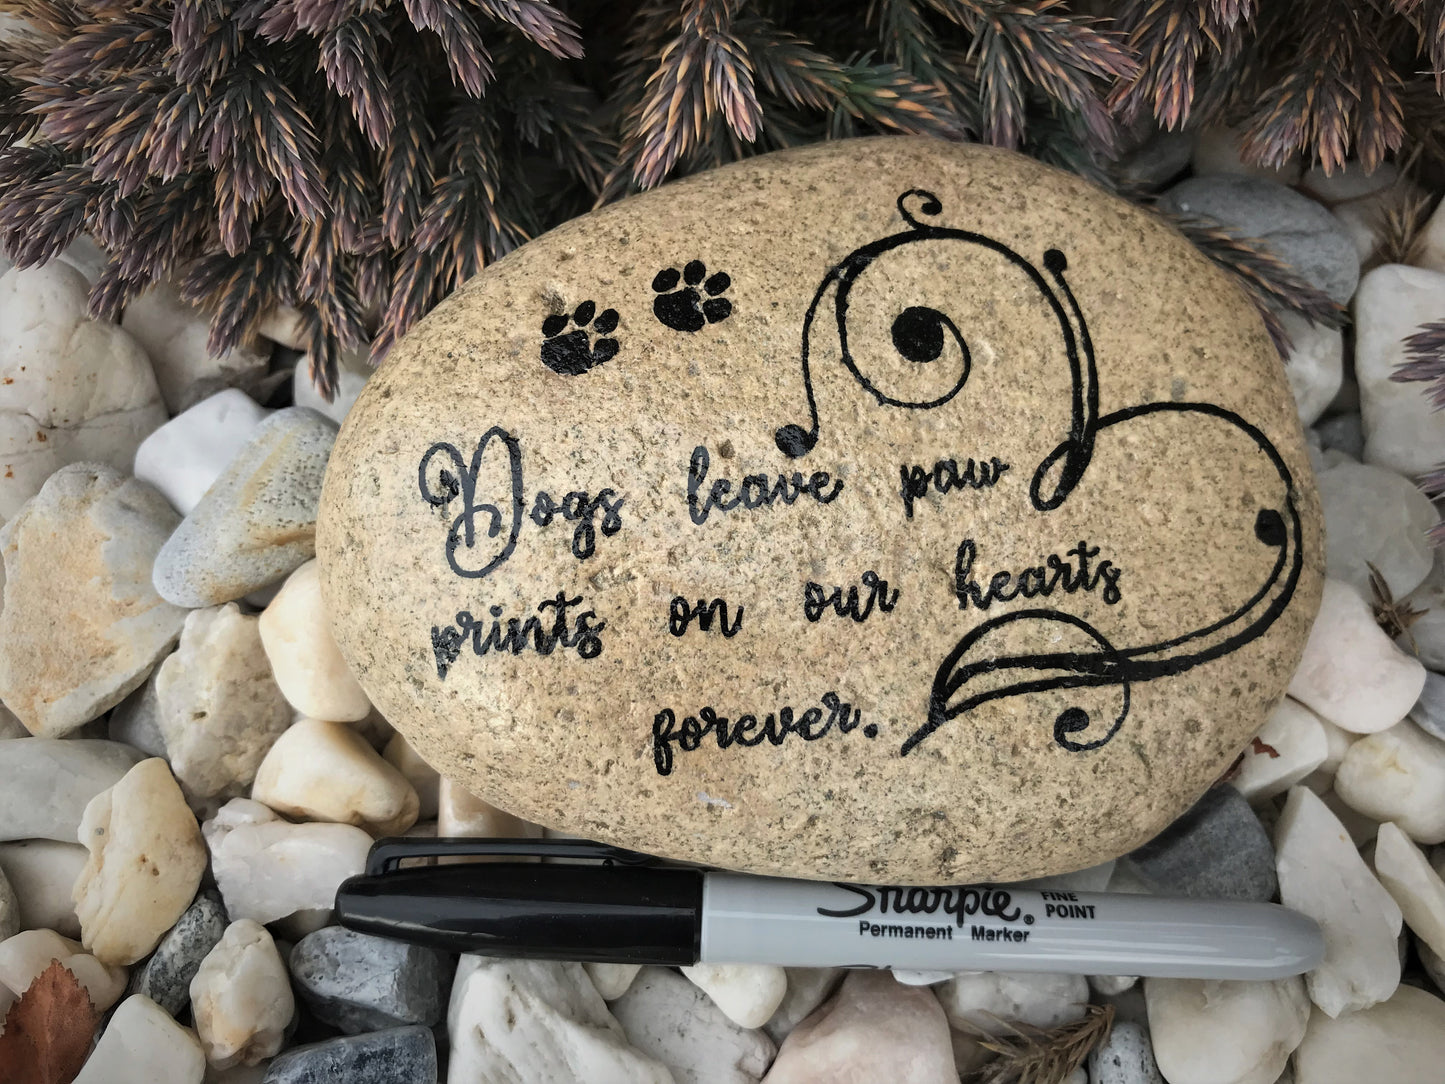 Medium Pet Memorial Stone - Dogs Paw Prints